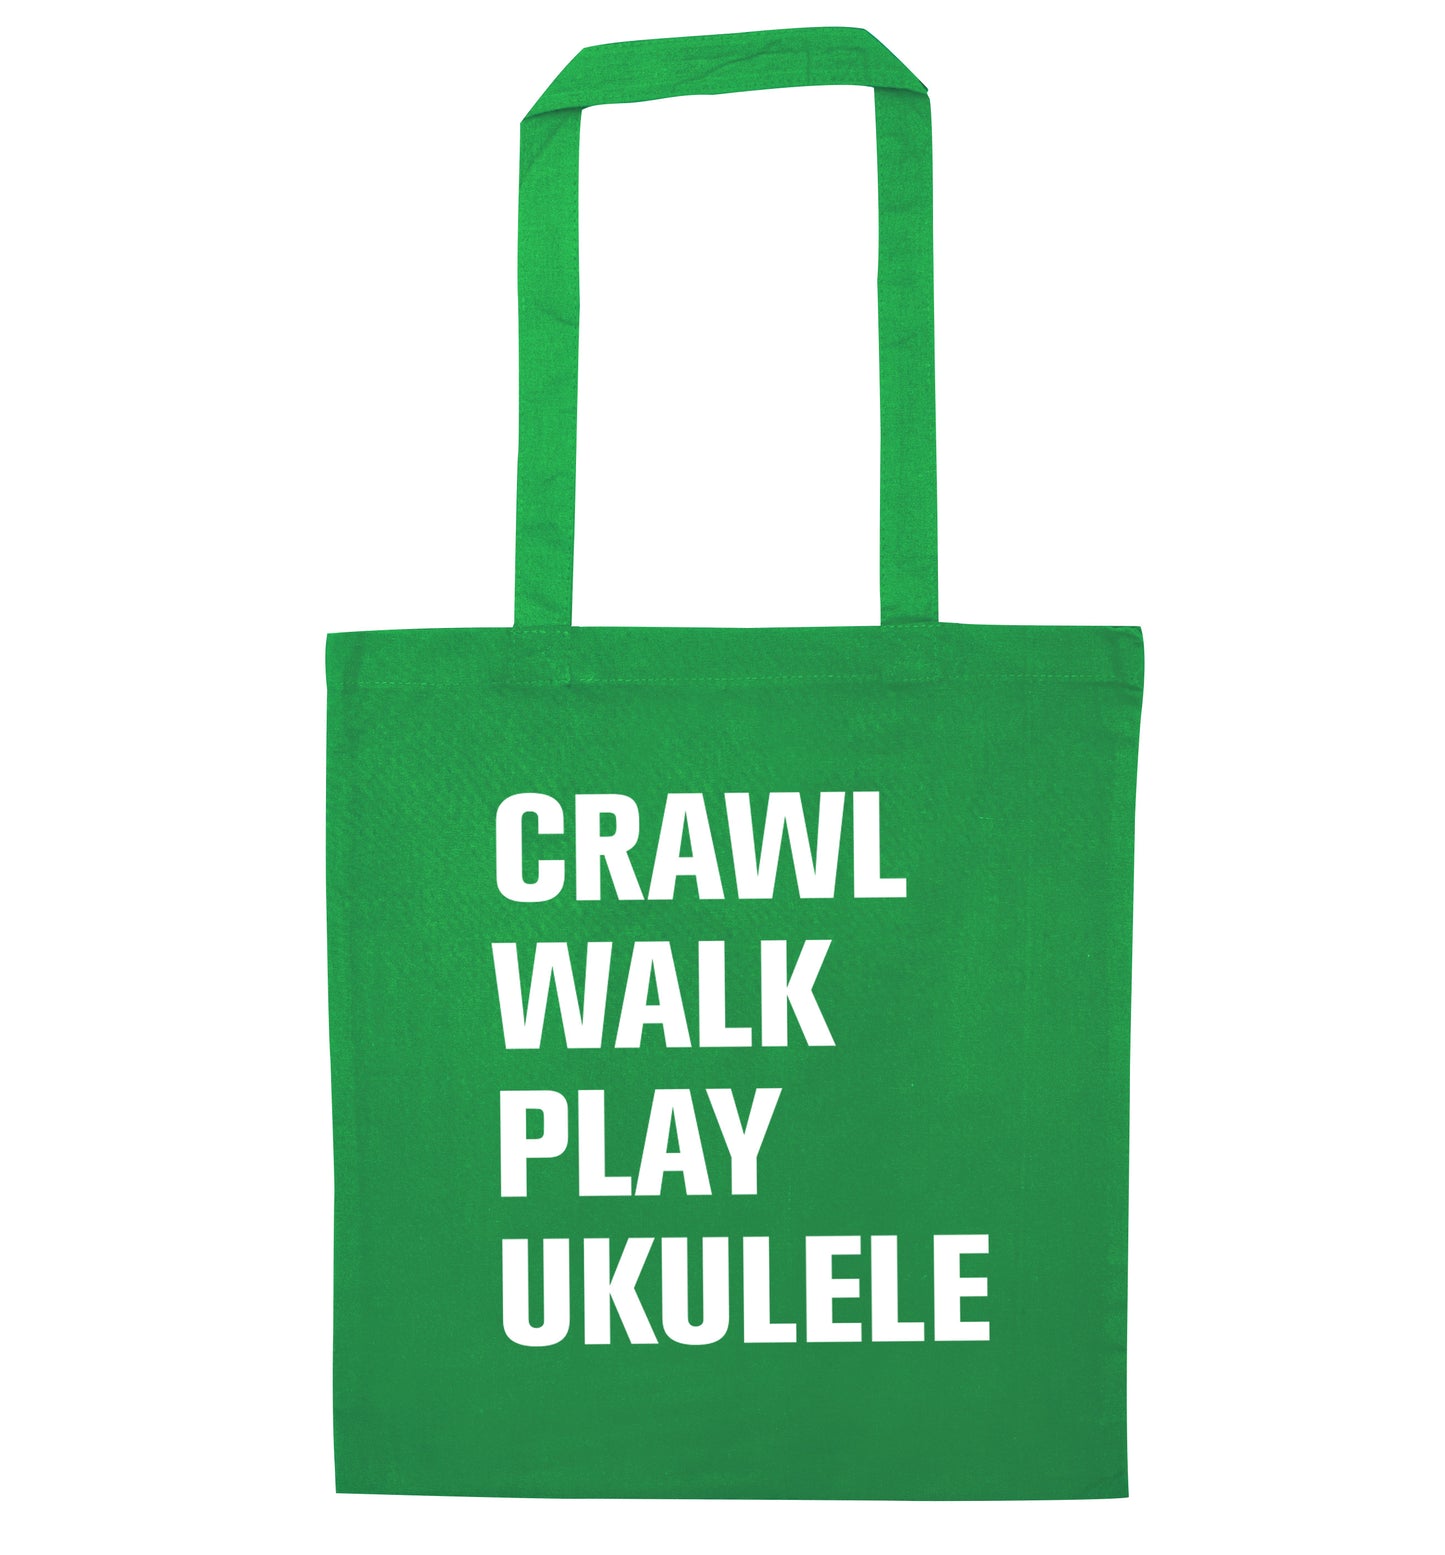 Crawl walk play ukulele green tote bag